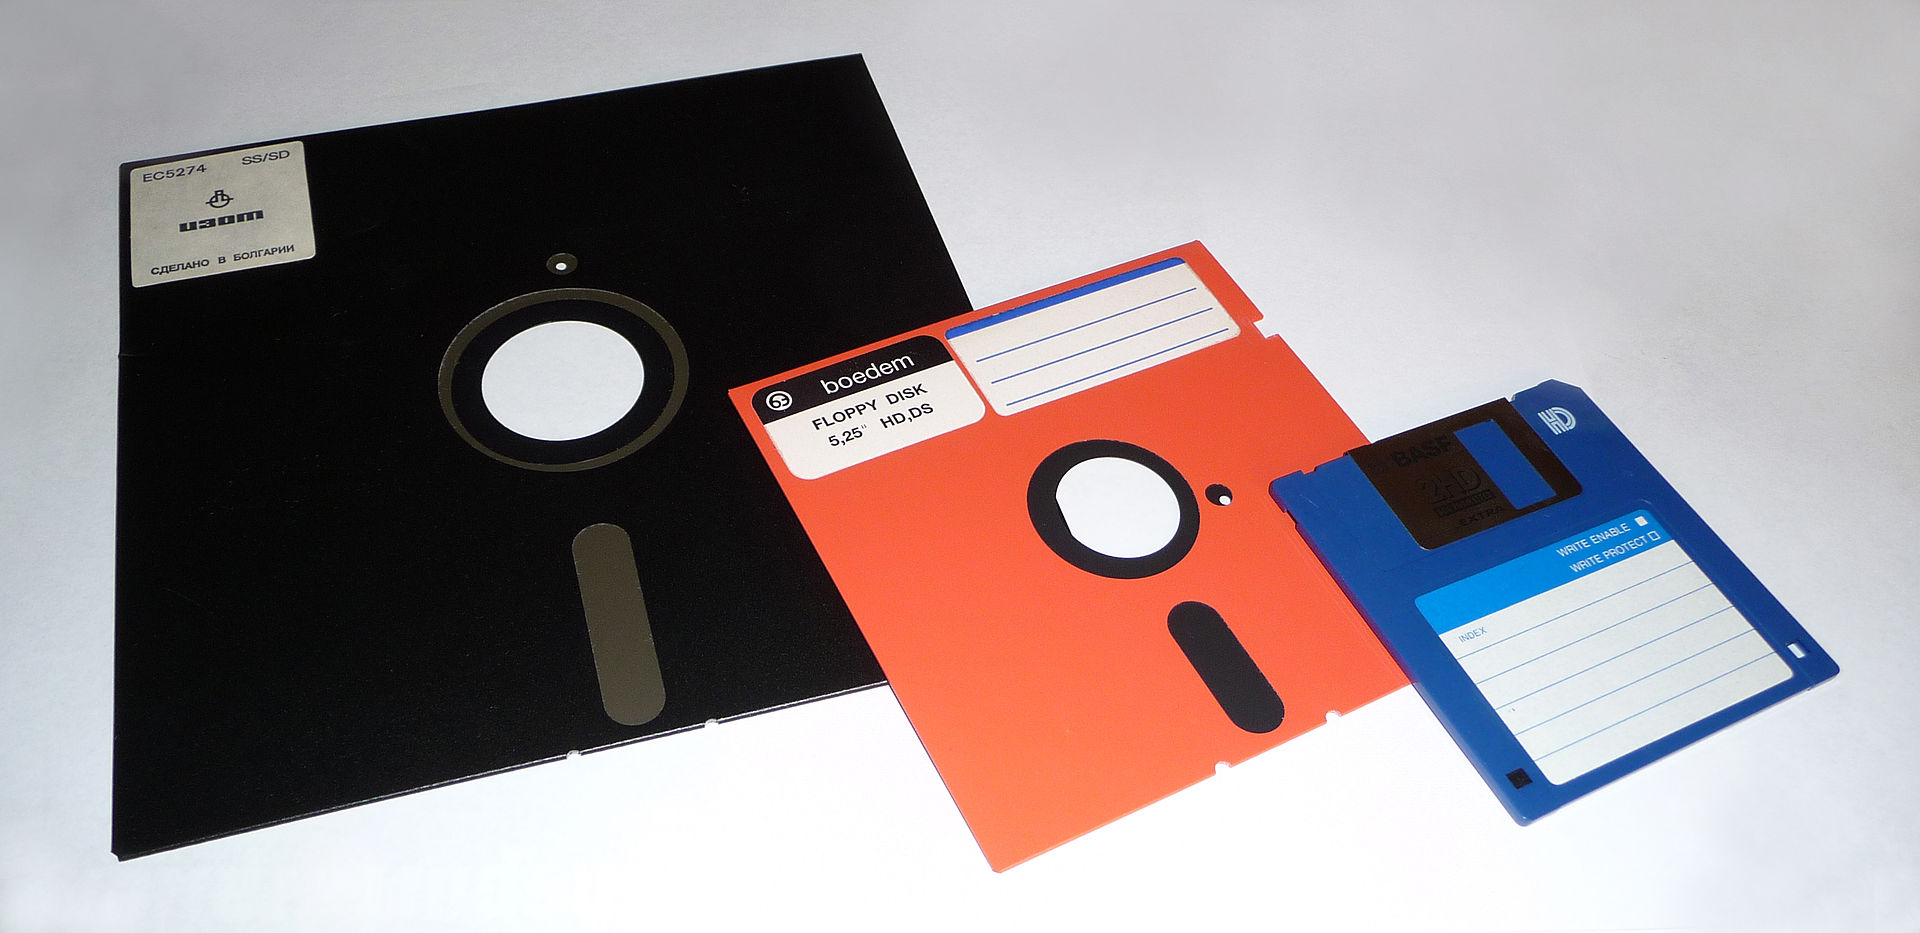 Il ministro degli affari digitali giapponese dichiara guerra ai Floppy disk! Ed ai CD, ed ai MiniDisc